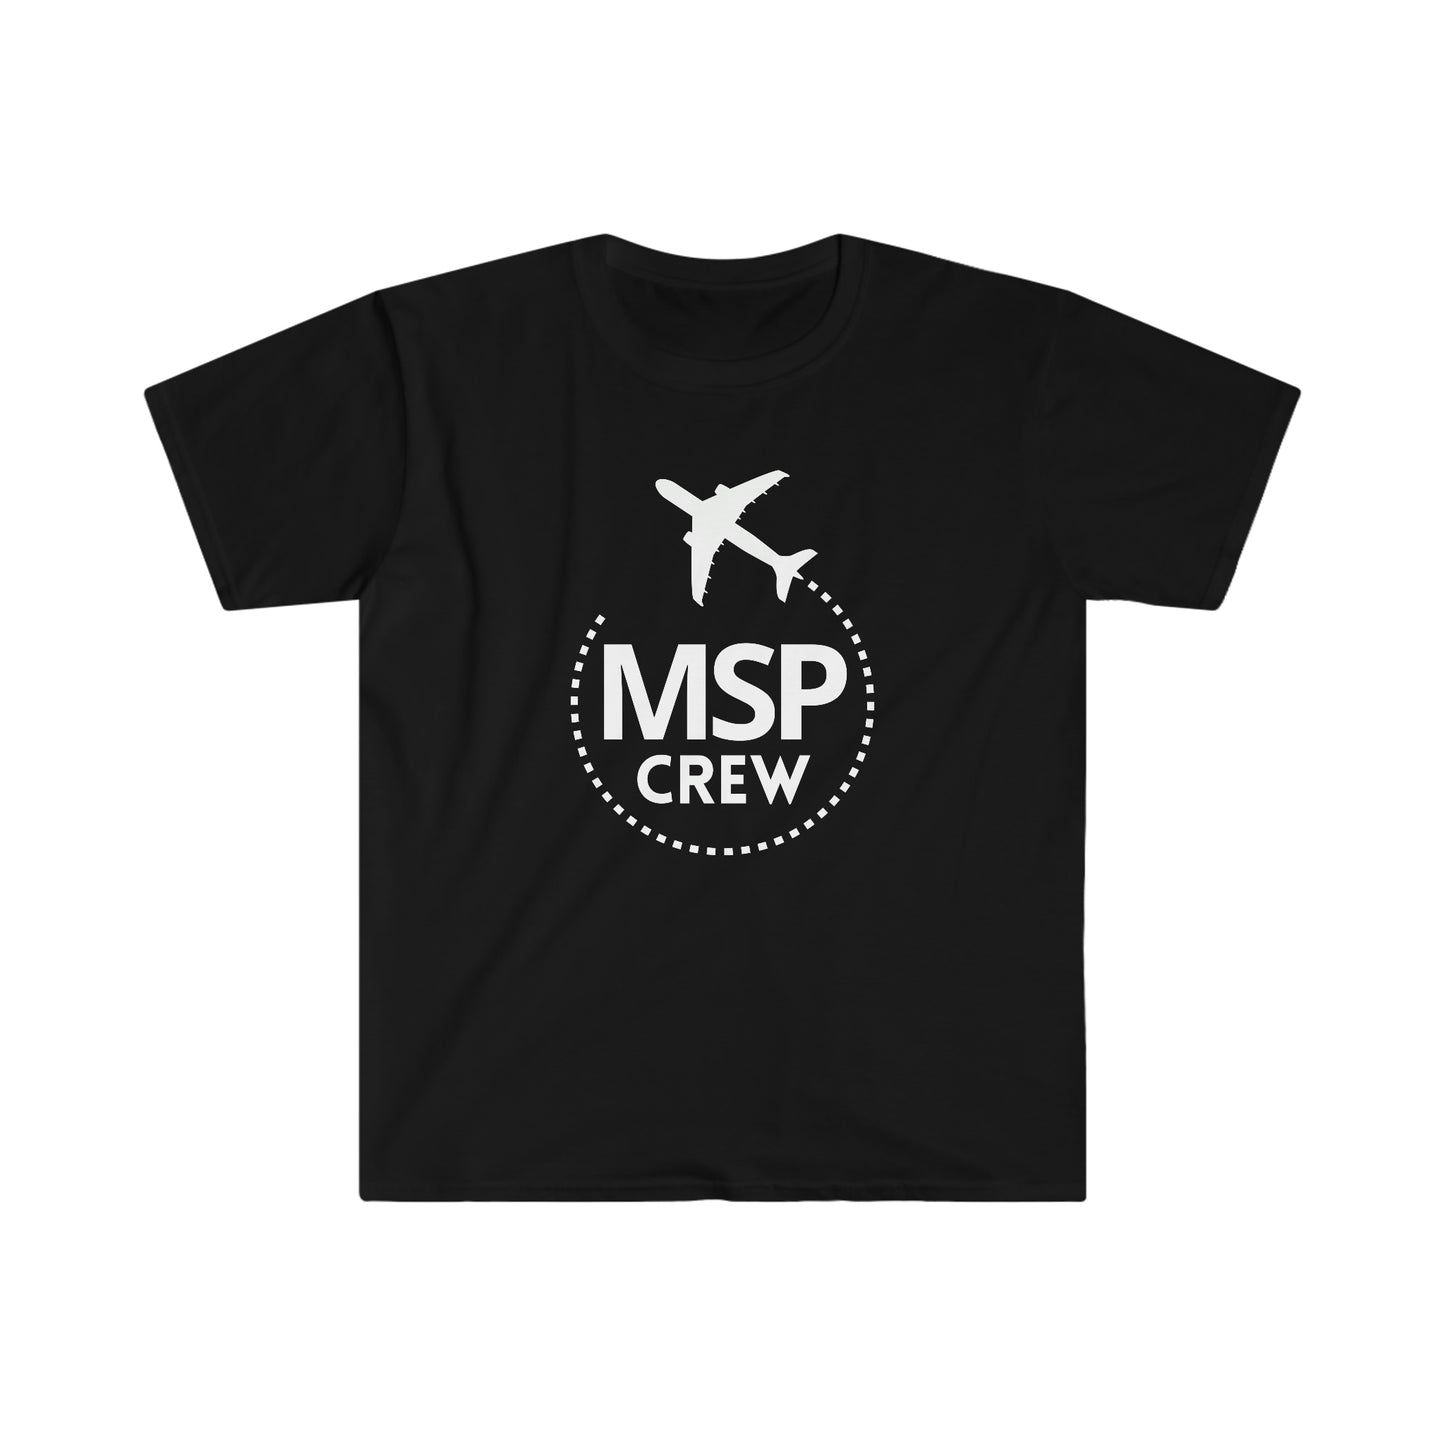 Minneapolis St. Paul MSP Airport Swag Aviation & Travel T-Shirt